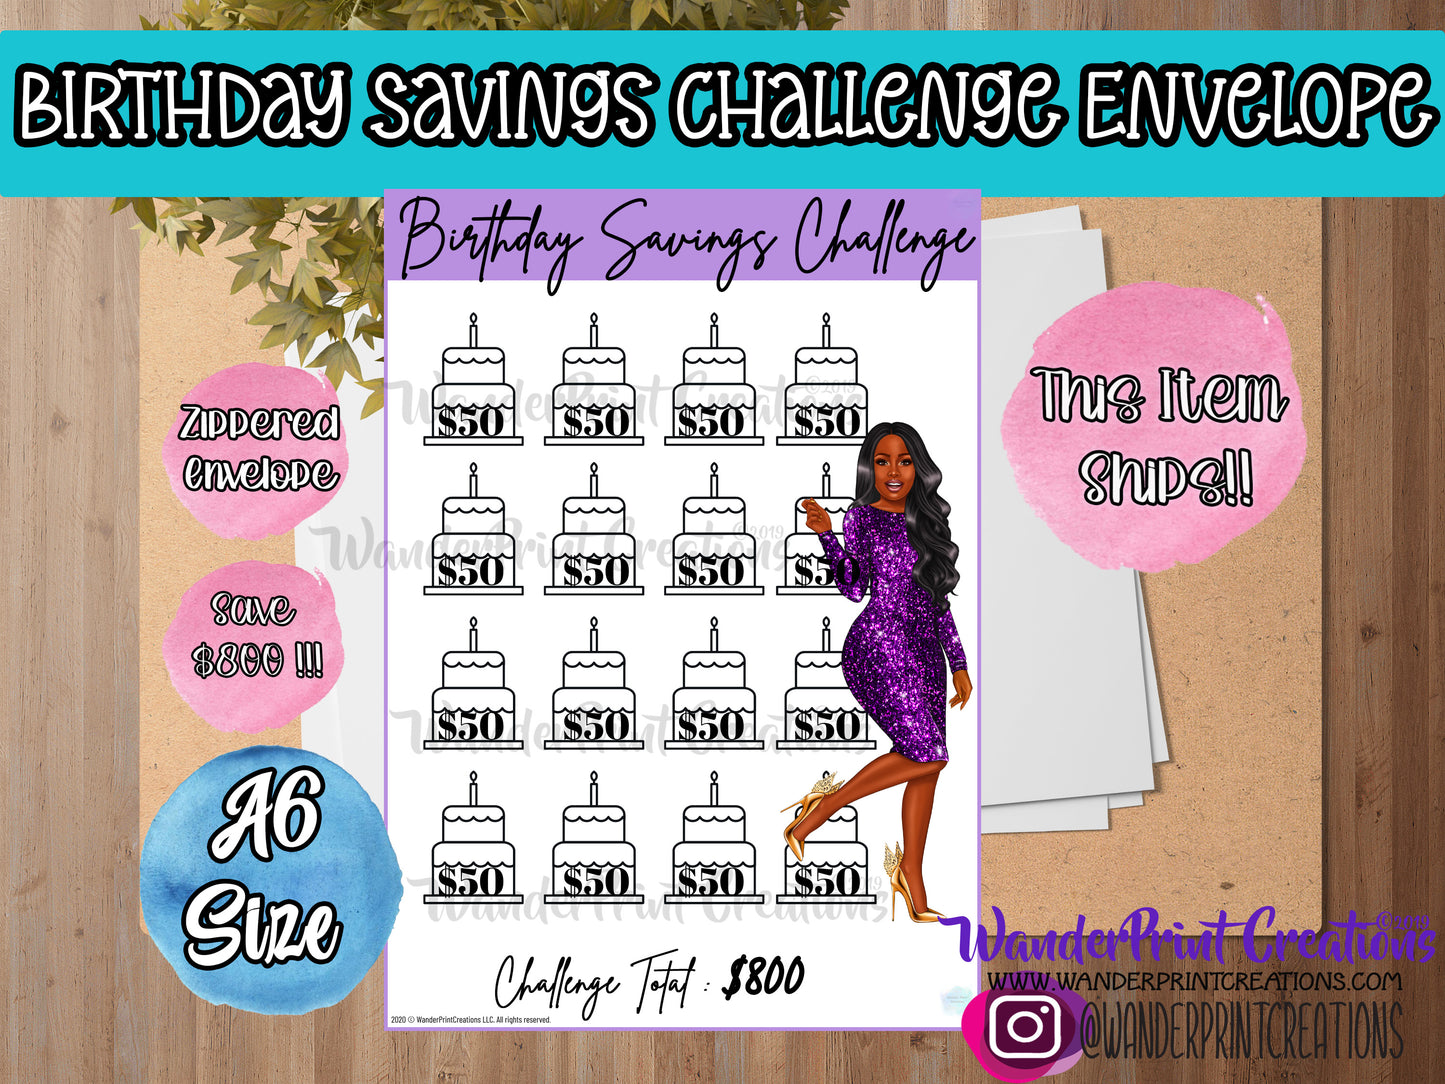 $800 BIRTHDAY SAVINGS CHALLENGE ENVELOPE